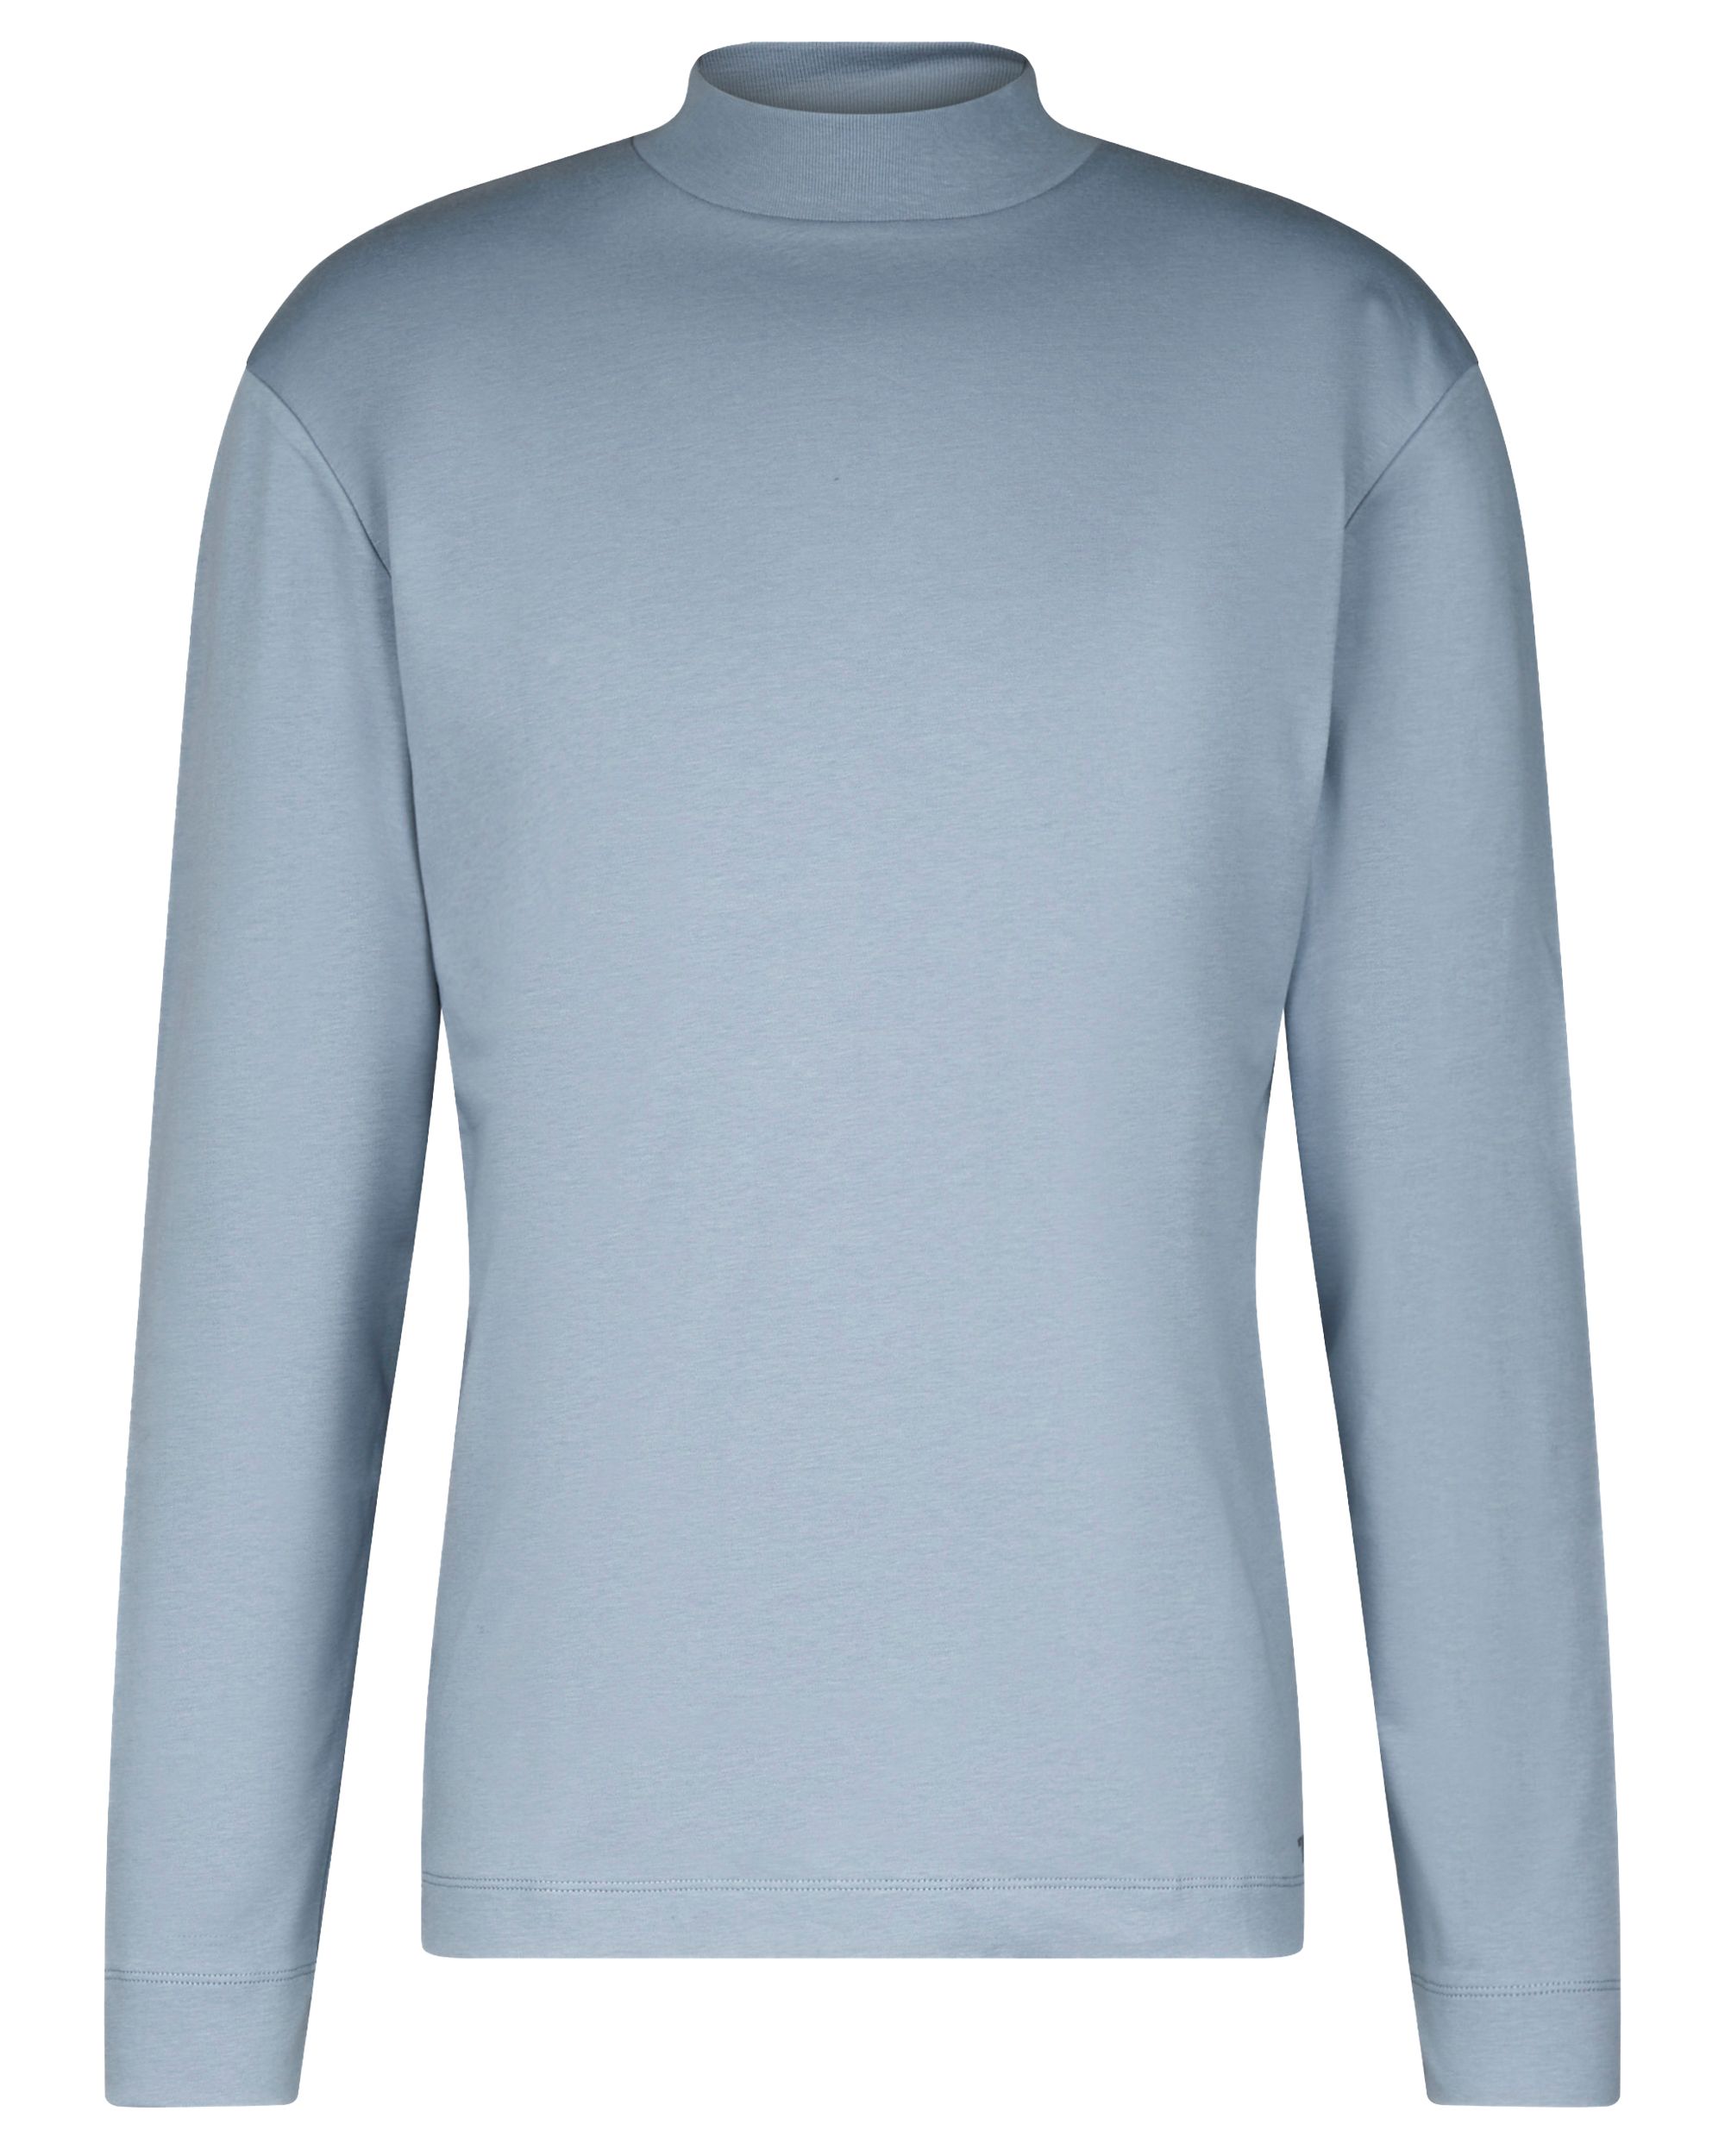 Drykorn Moritz T-shirt LM Blauw 080173-001-L